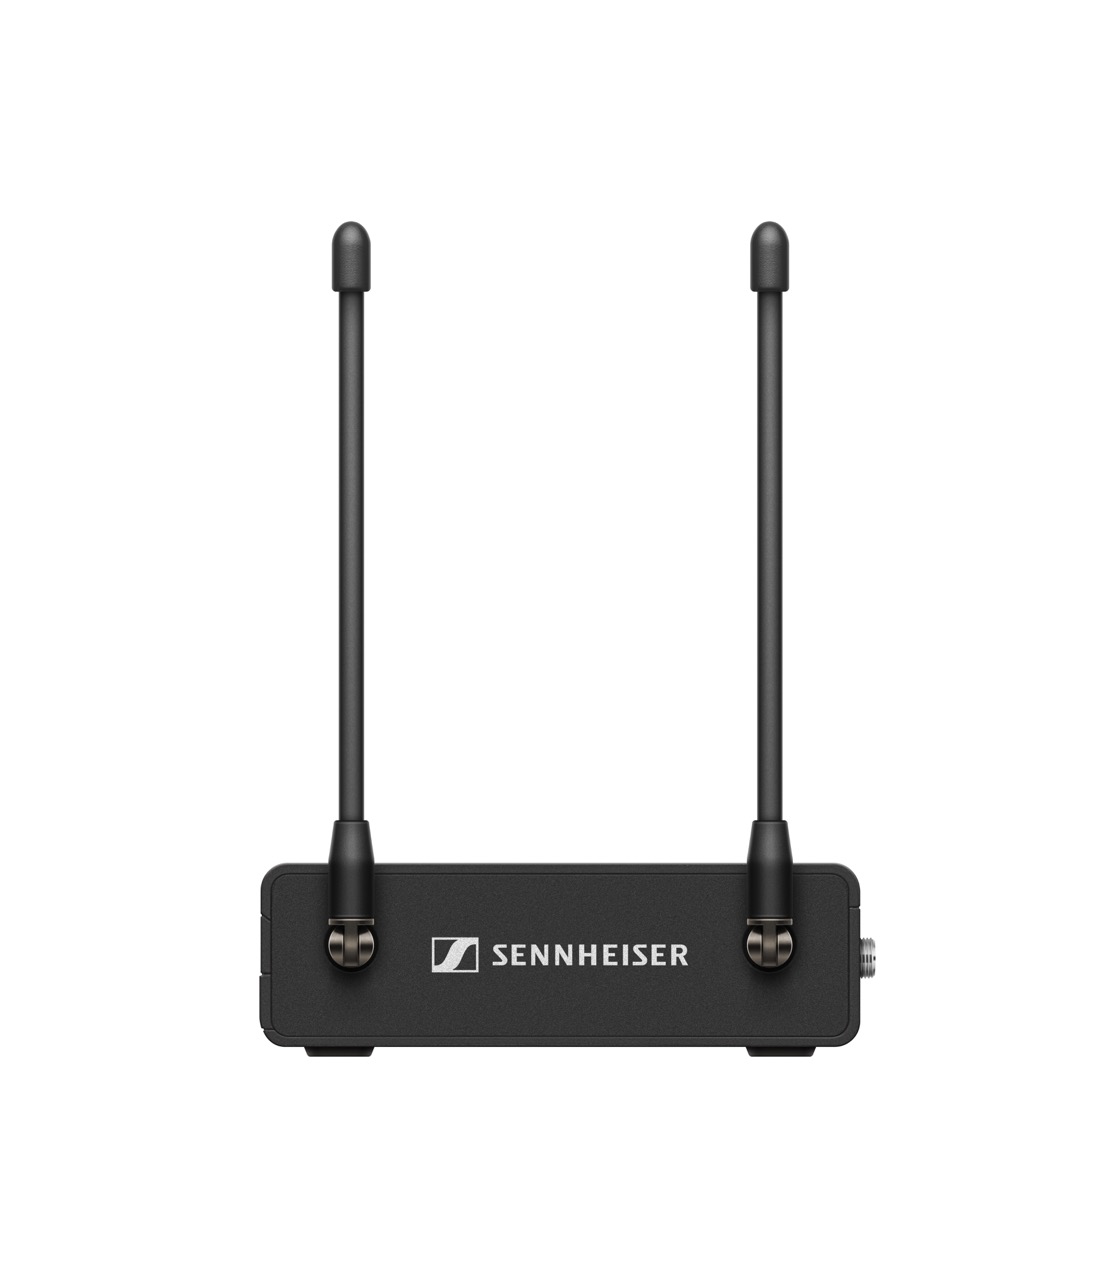 Sennheiser EW-DP EK Portabler Empfänger, Rückseite mit Antennen